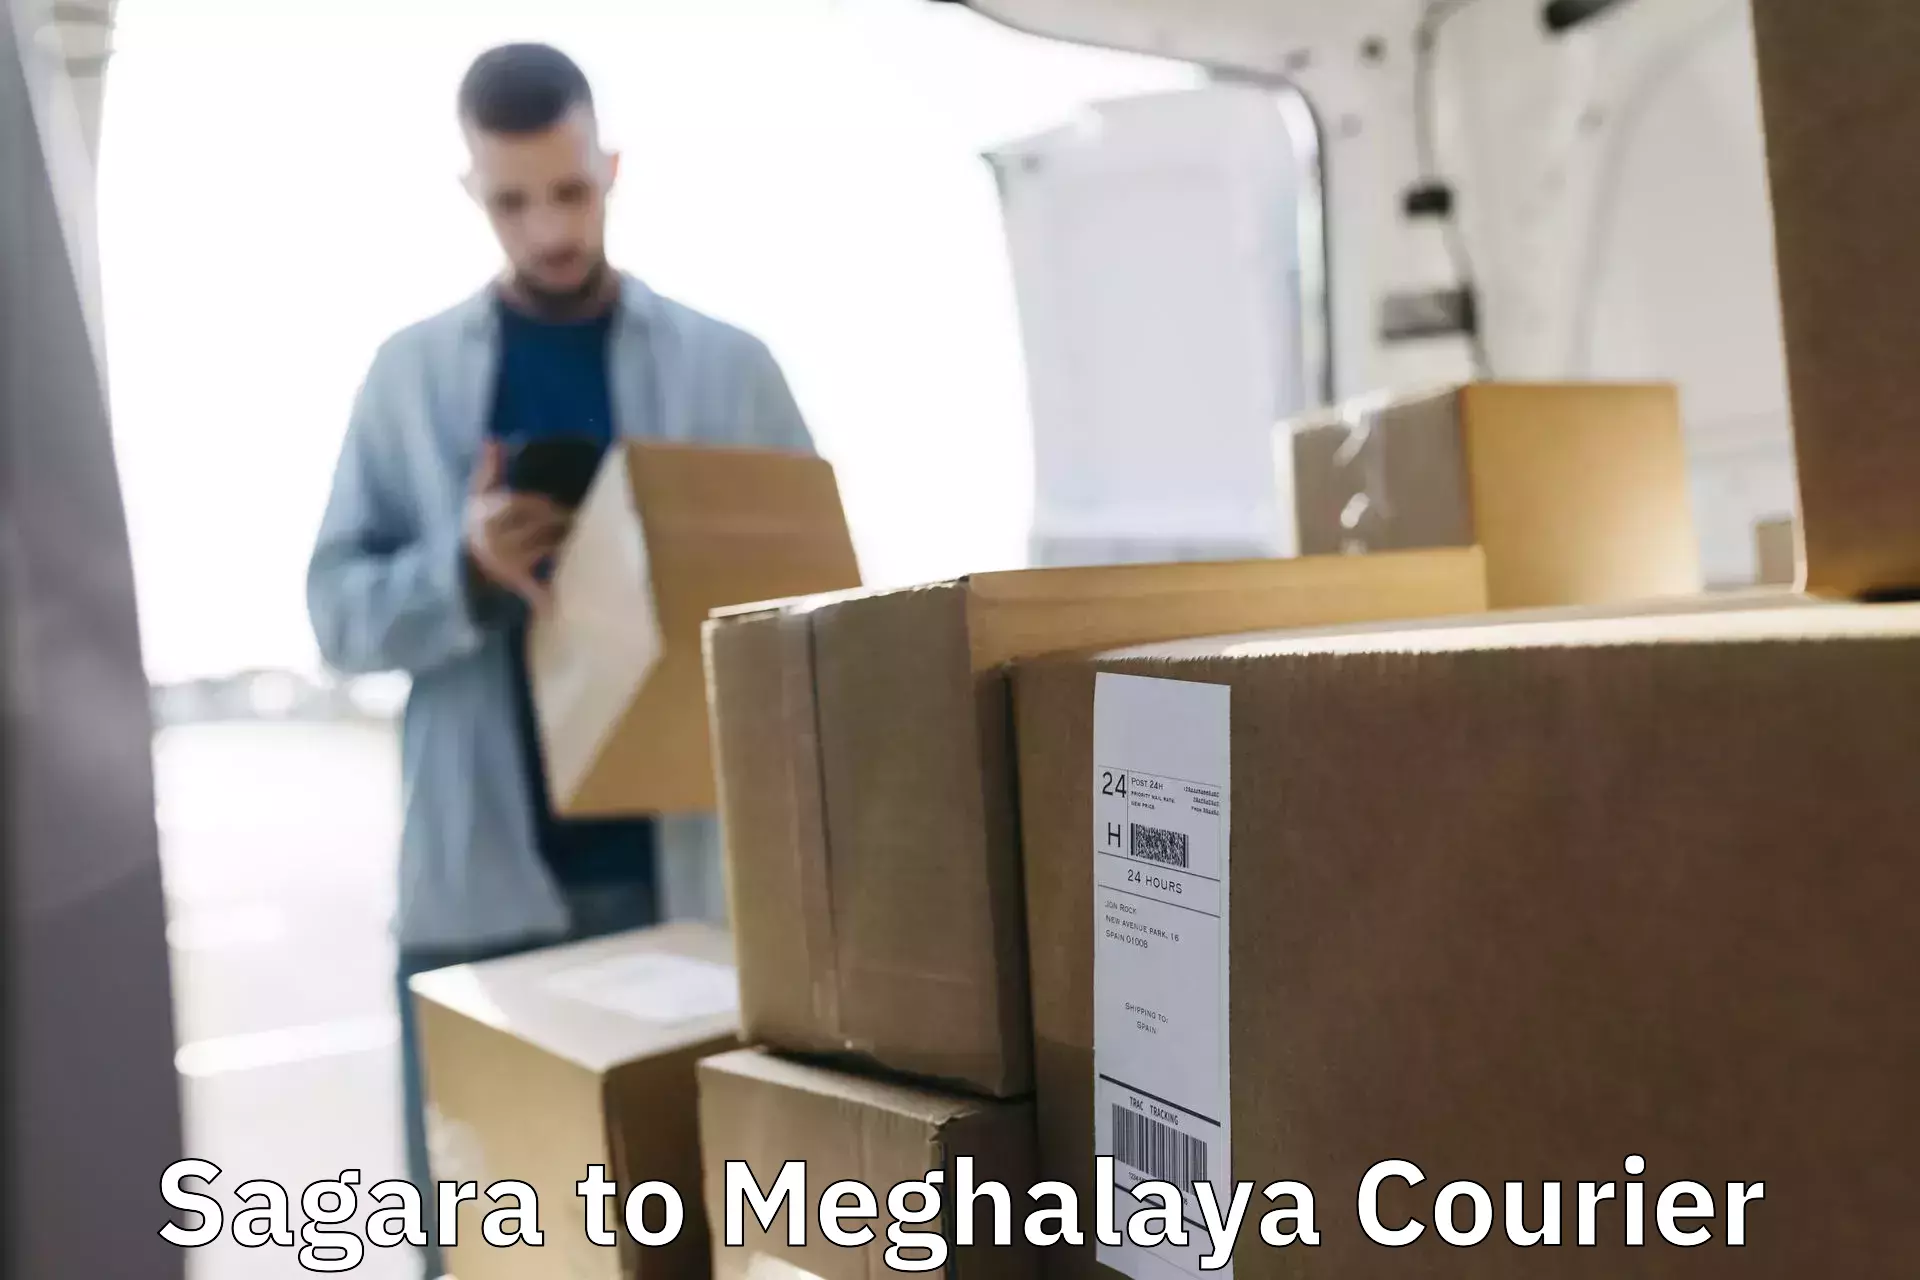 Cash on delivery service Sagara to Meghalaya